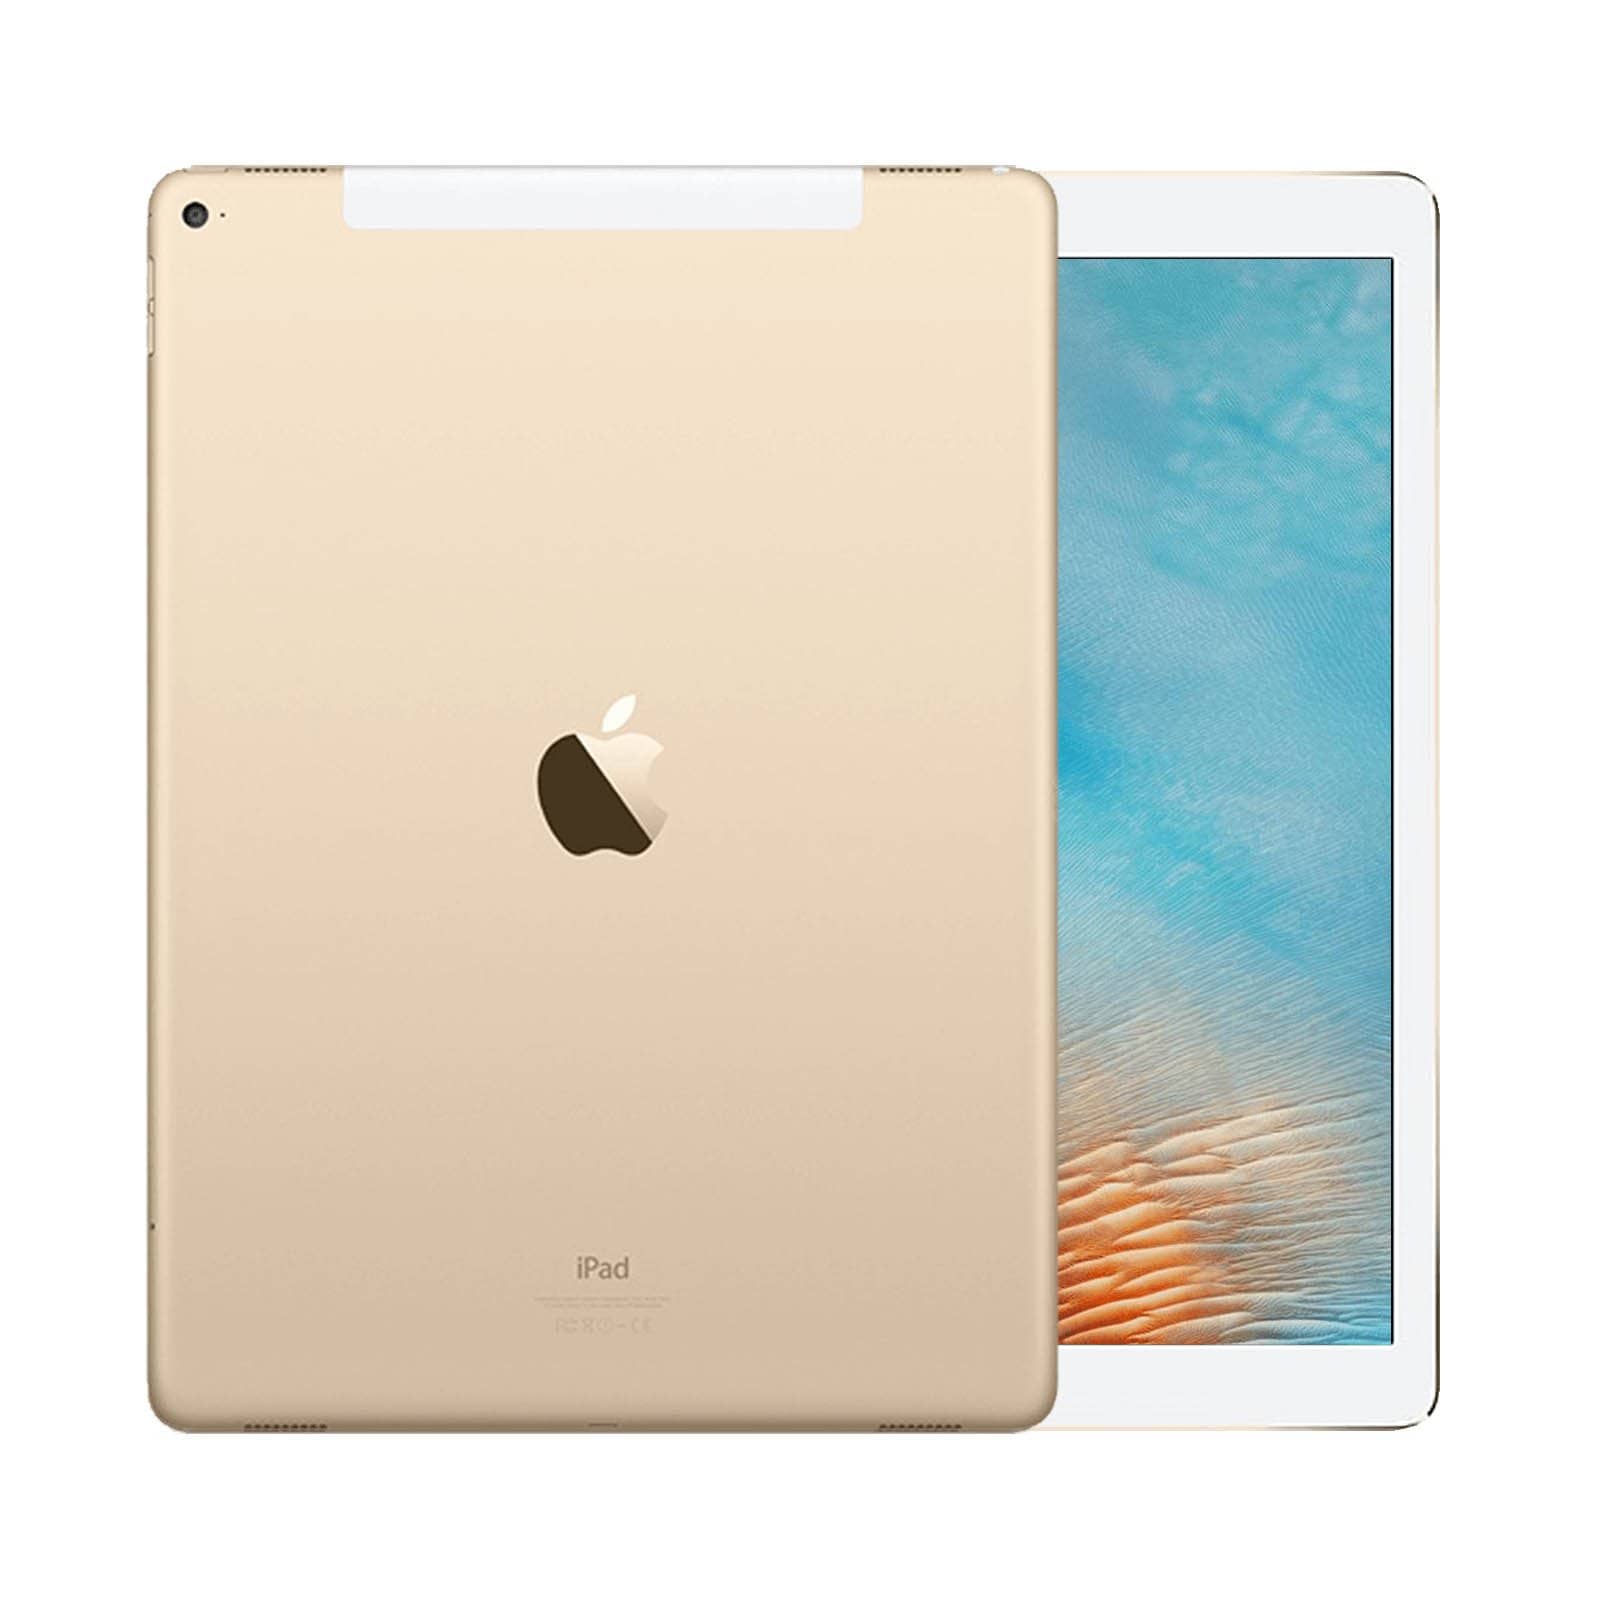 iPad Pro 12.9 Inch 1st Gen 256GB Gold Very Good - WiFi